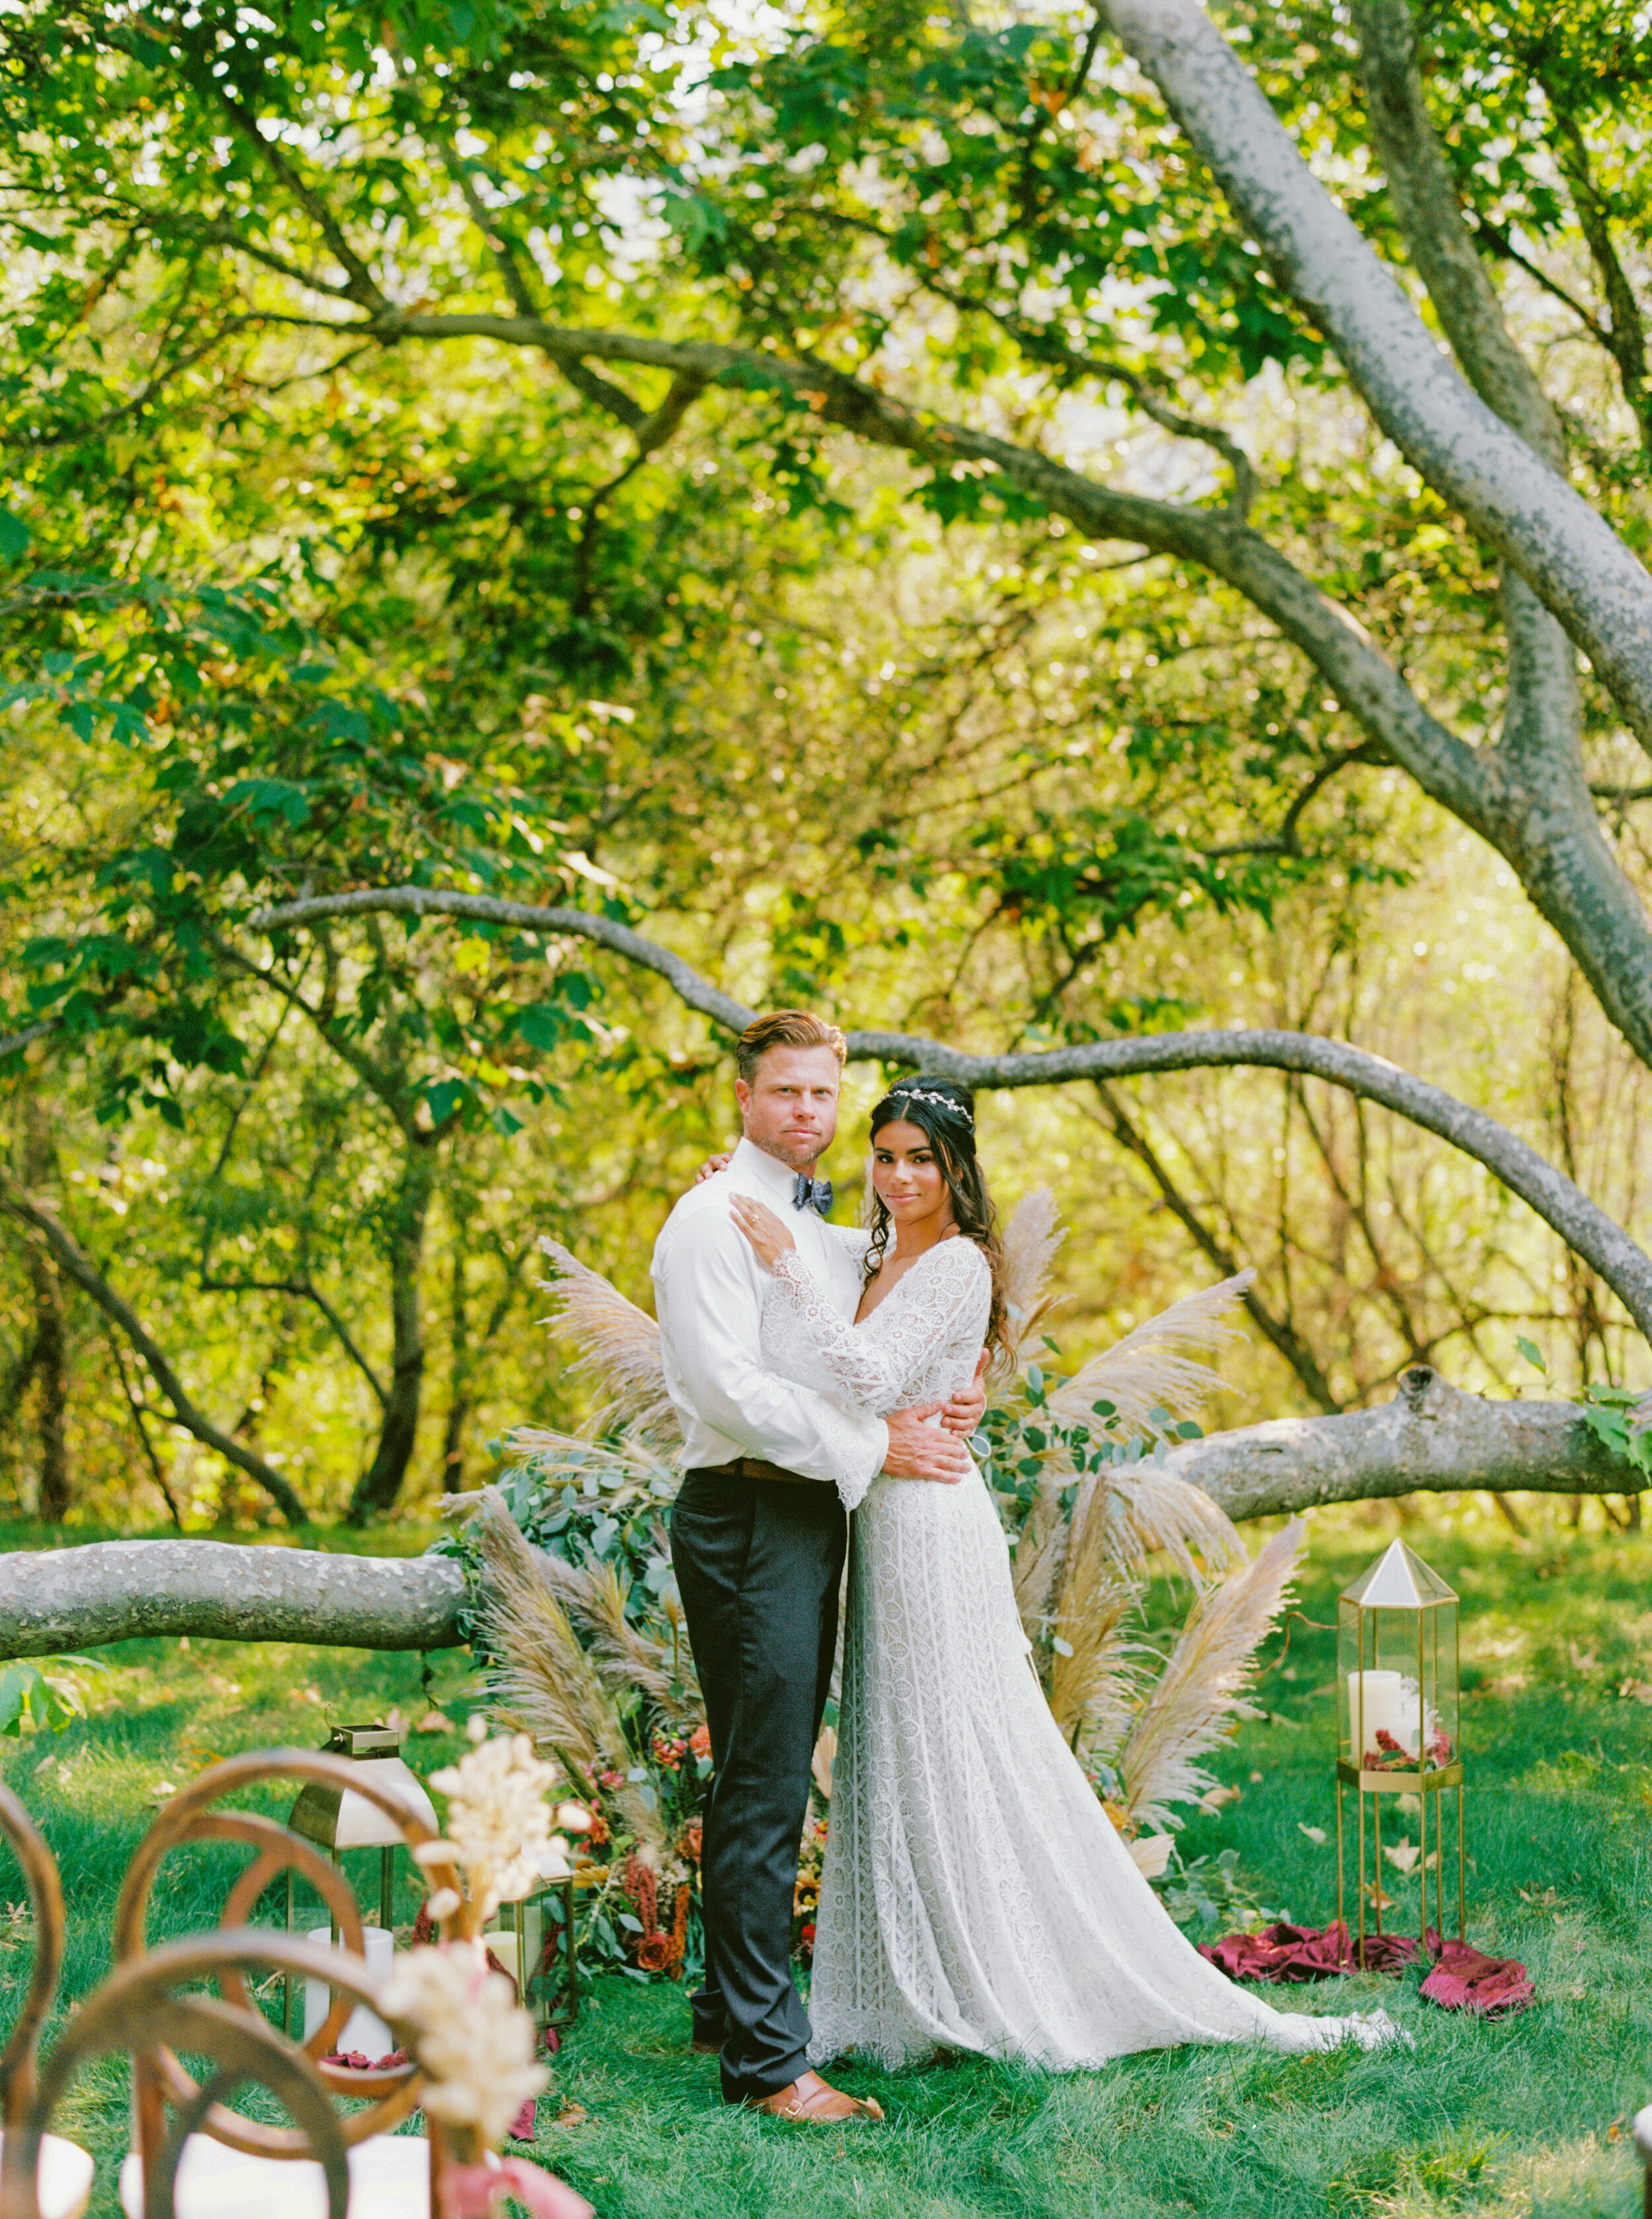 Sarahi Hadden - An Earthy Summer Boho Inspired Wedding with Sunset Hues at Gardener Ranch-67.jpg